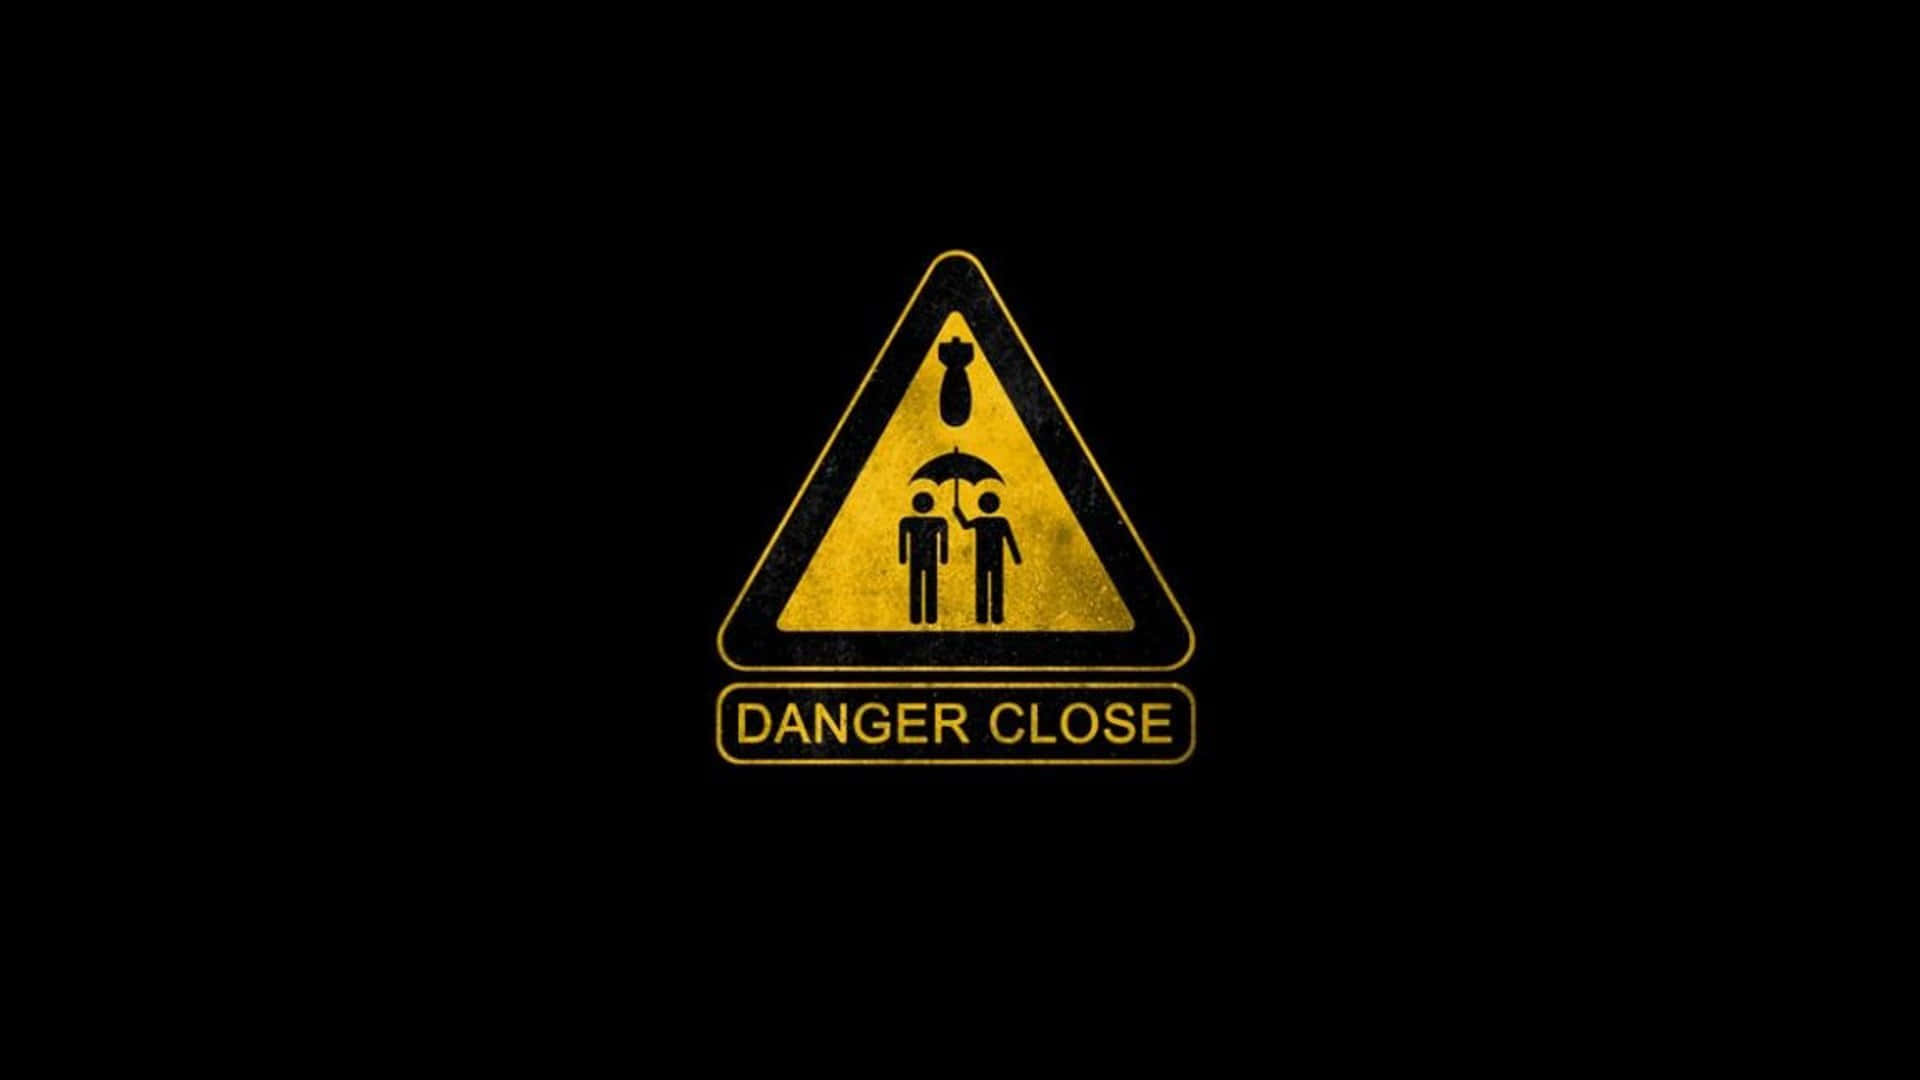 Danger Close Warning Sign Wallpaper